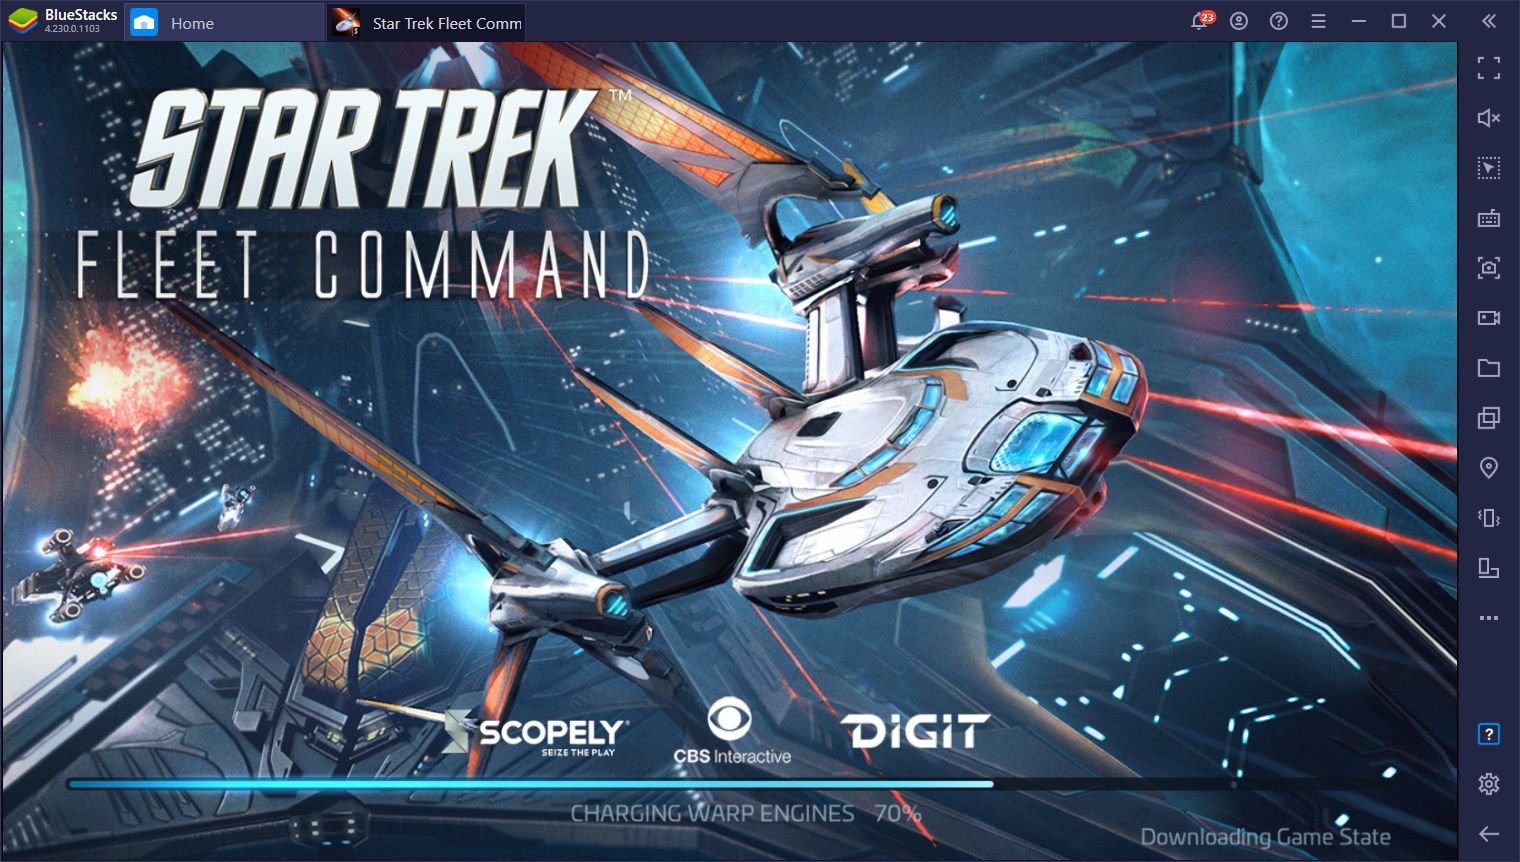 Star Trek Fleet Command September Update will Add Elements from the Entire Star Trek Timeline